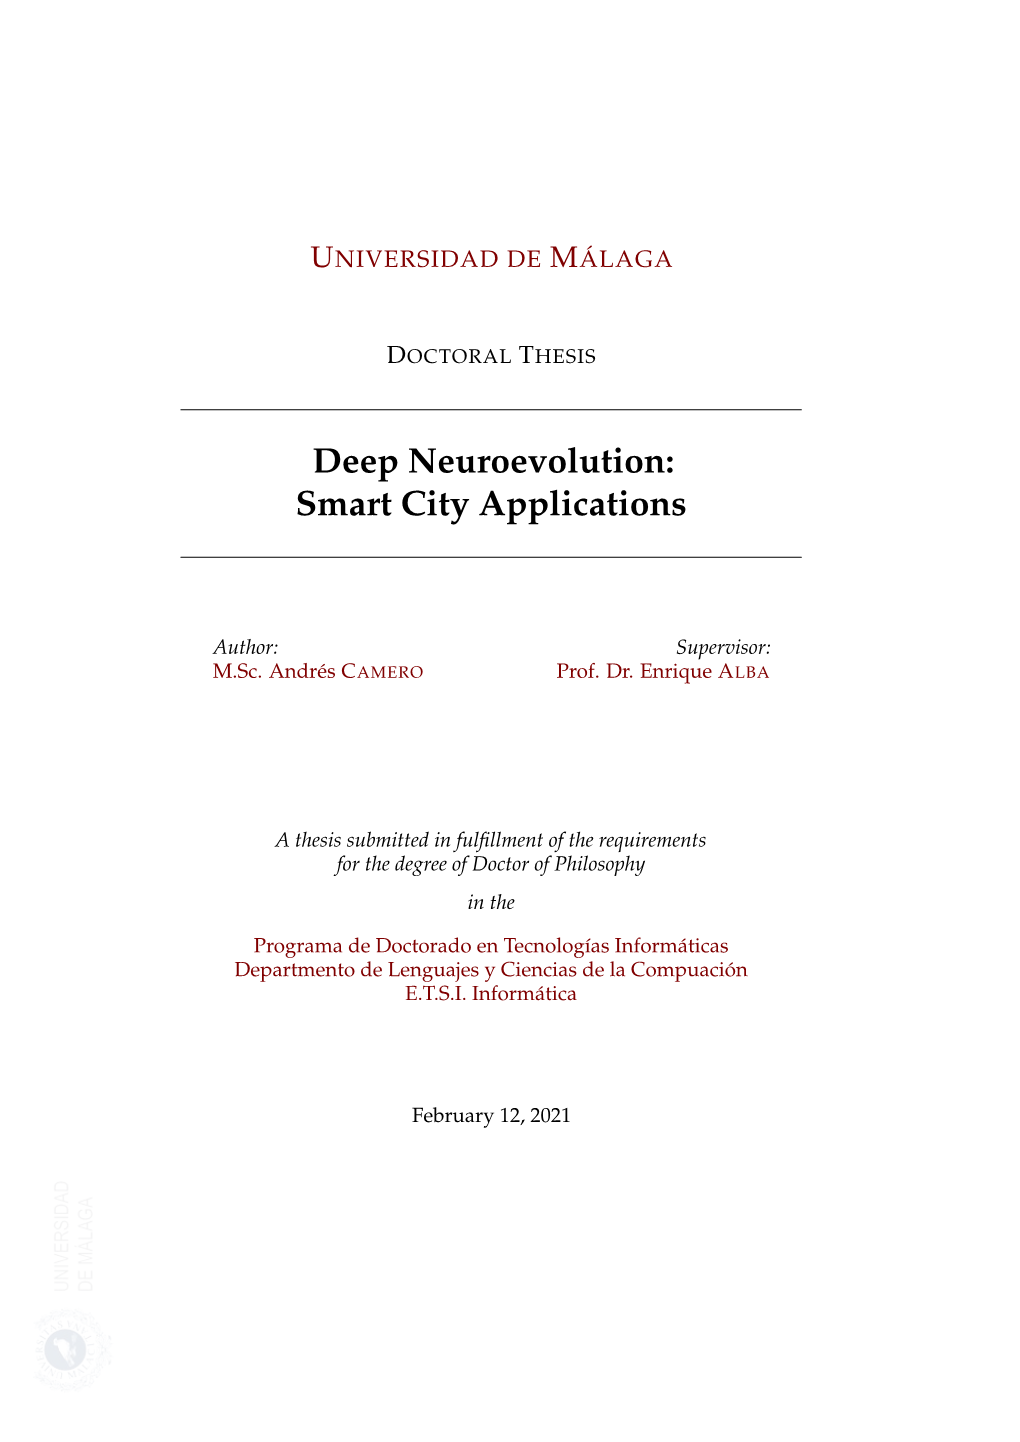 Deep Neuroevolution: Smart City Applications